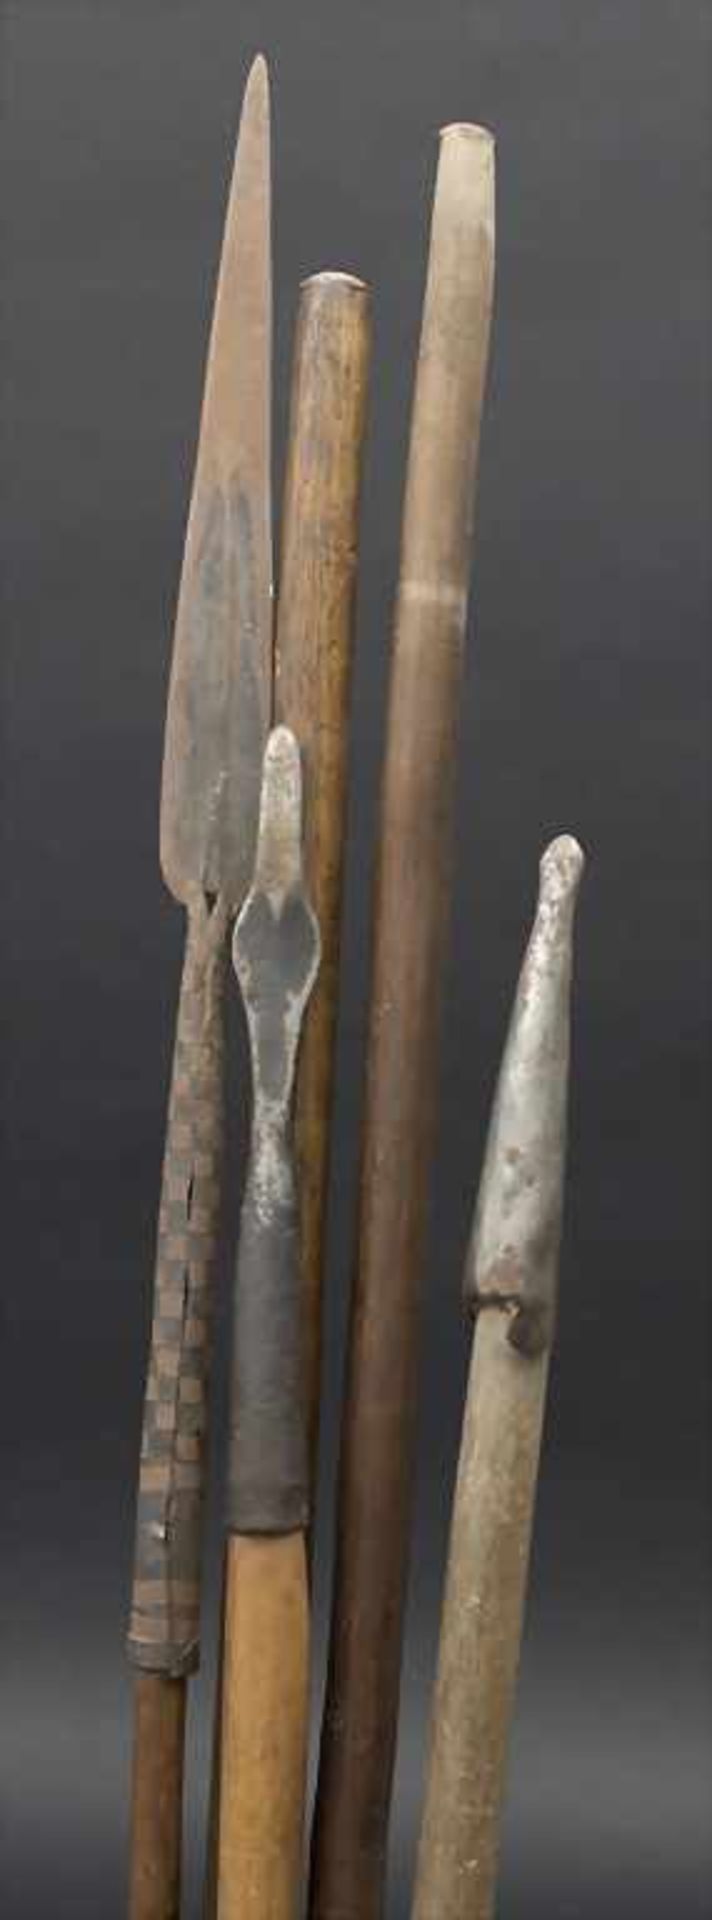 Konvolut 3 Stöcke und 2 Speere / A set of 3 sticks and 2 spears, TansaniaMaterial: Holz, teils mit